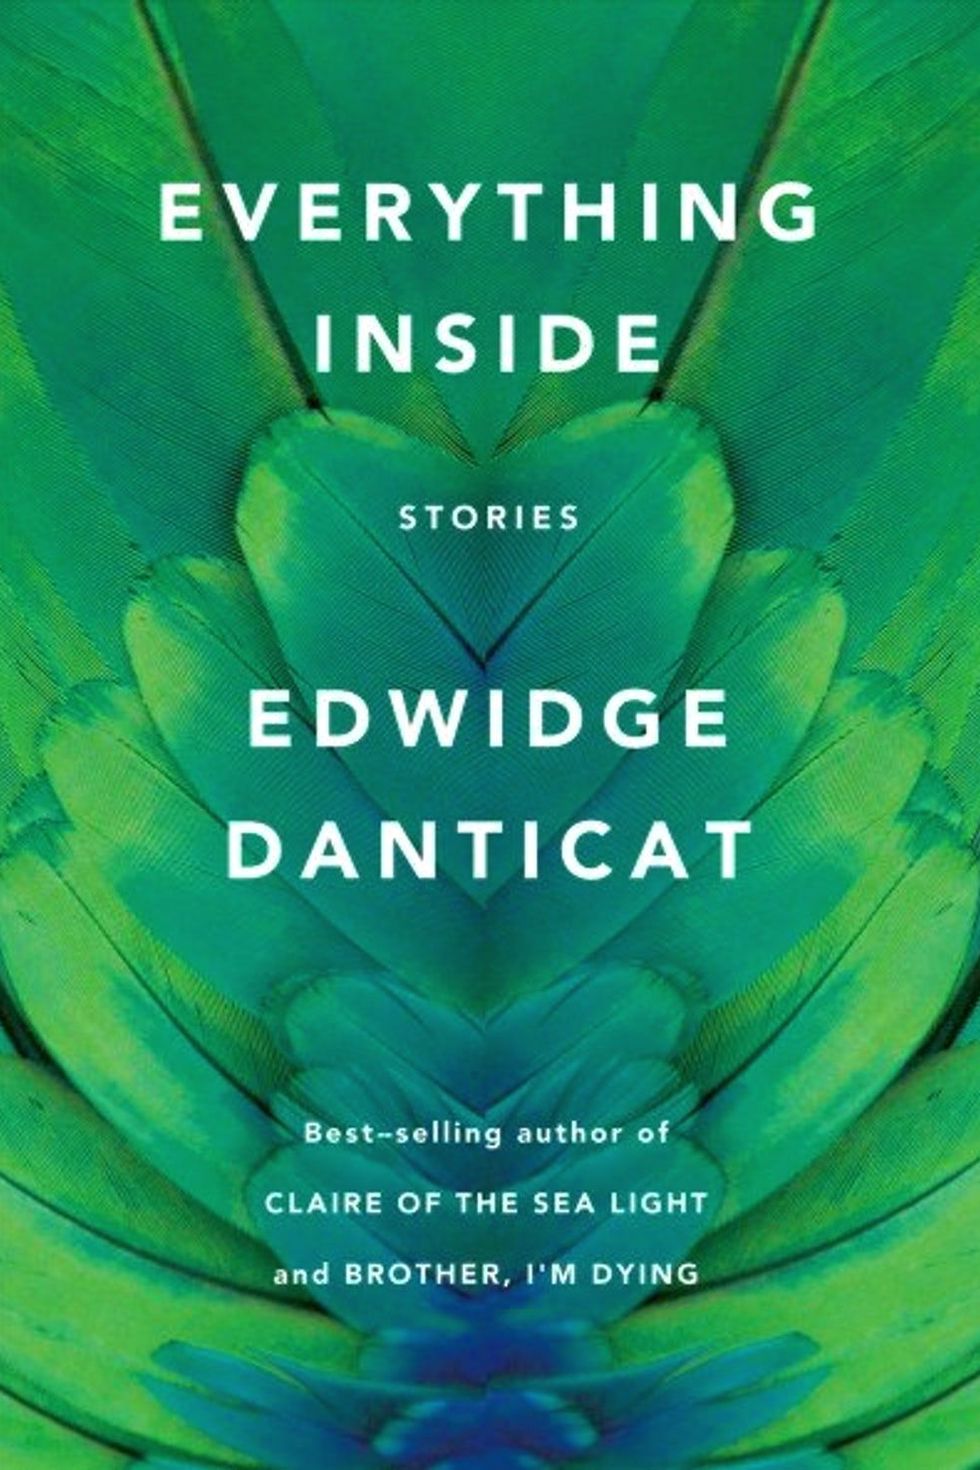 'Everything Inside' by Edwidge Danticat